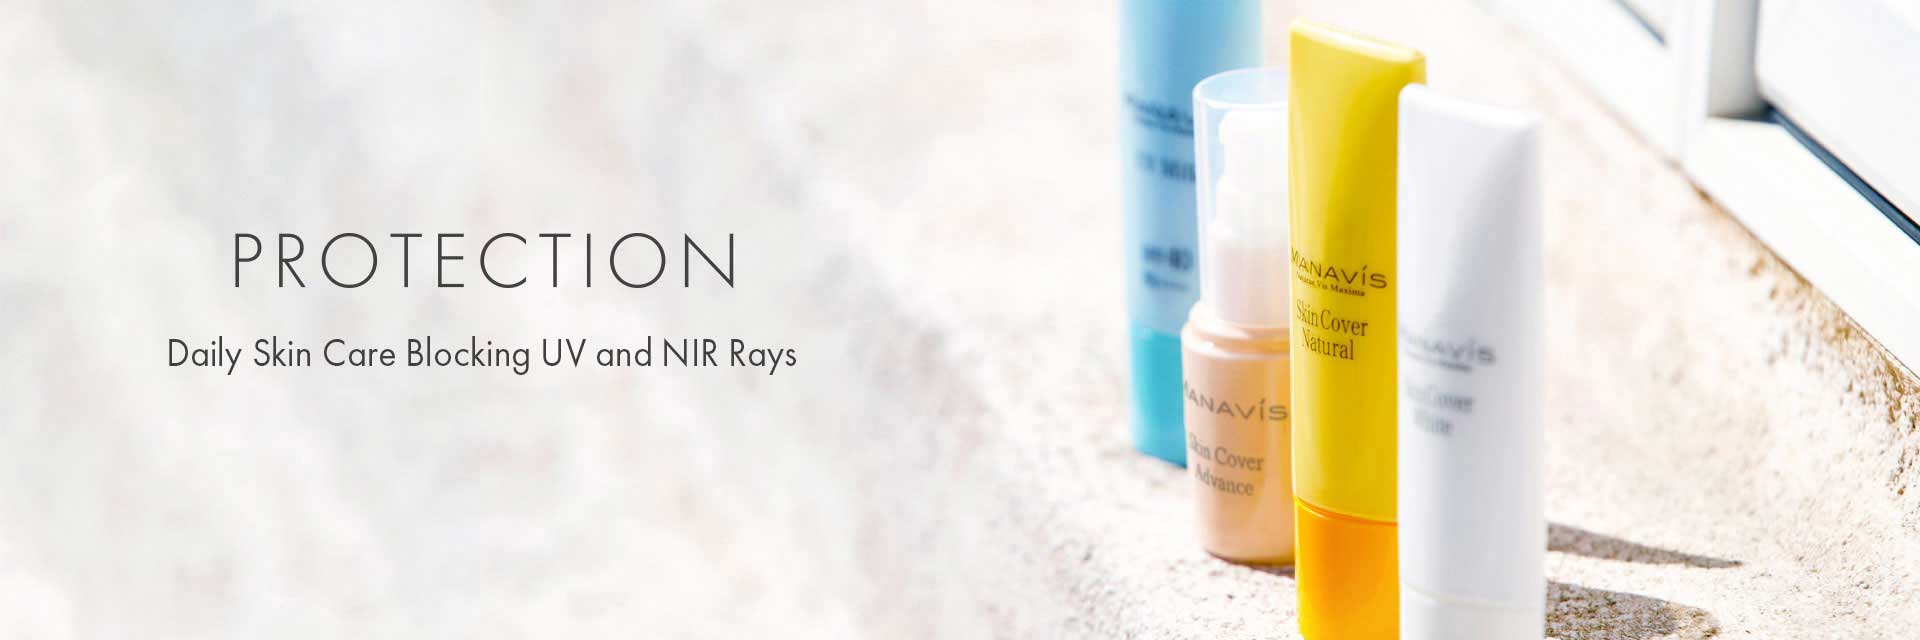 PROTECTION Daily Skin Care Blocking UV and NIR Rays Manavis Cosmetics